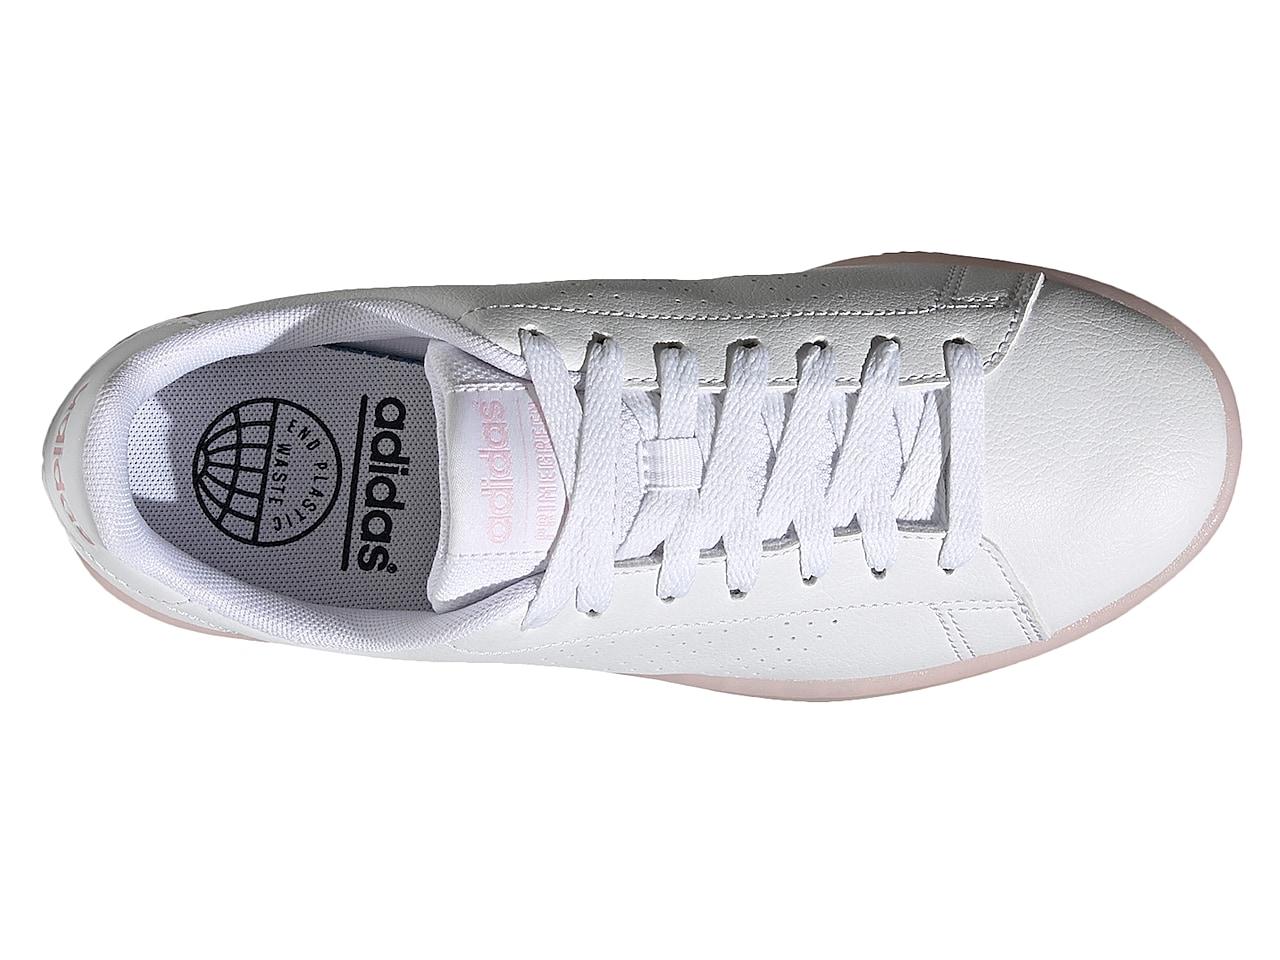 adidas Advantage Eco Sneaker in White | Lyst